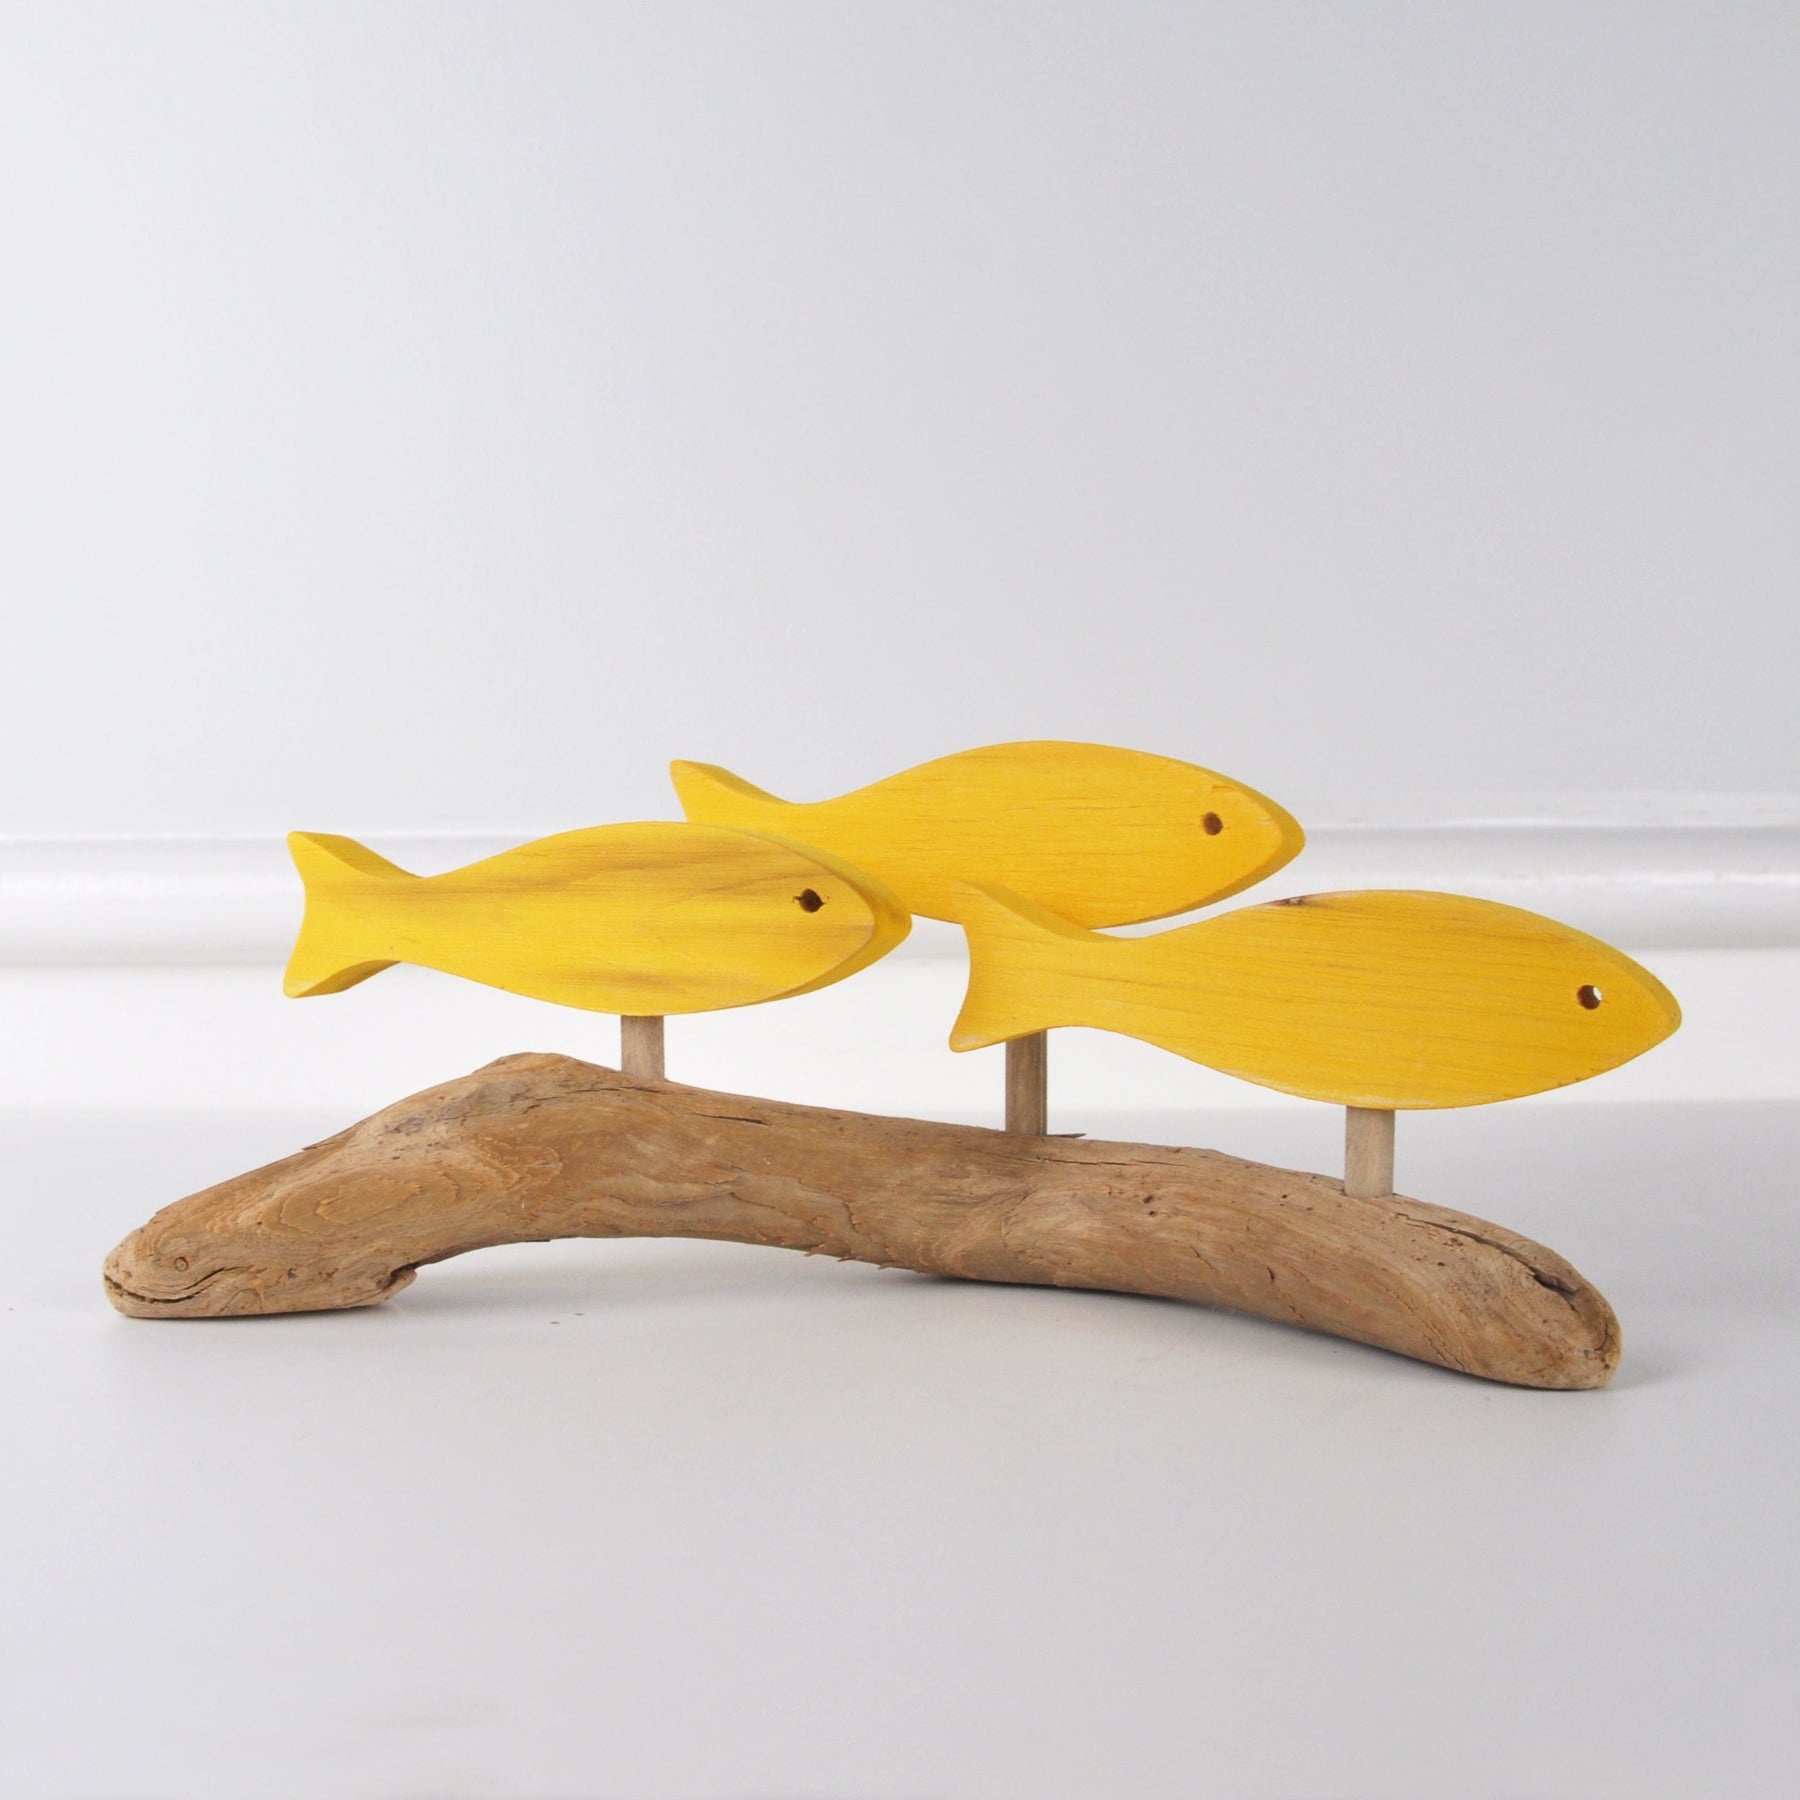 Jerry Walsh - 3 Fish Driftwood Sculpture - Yellow